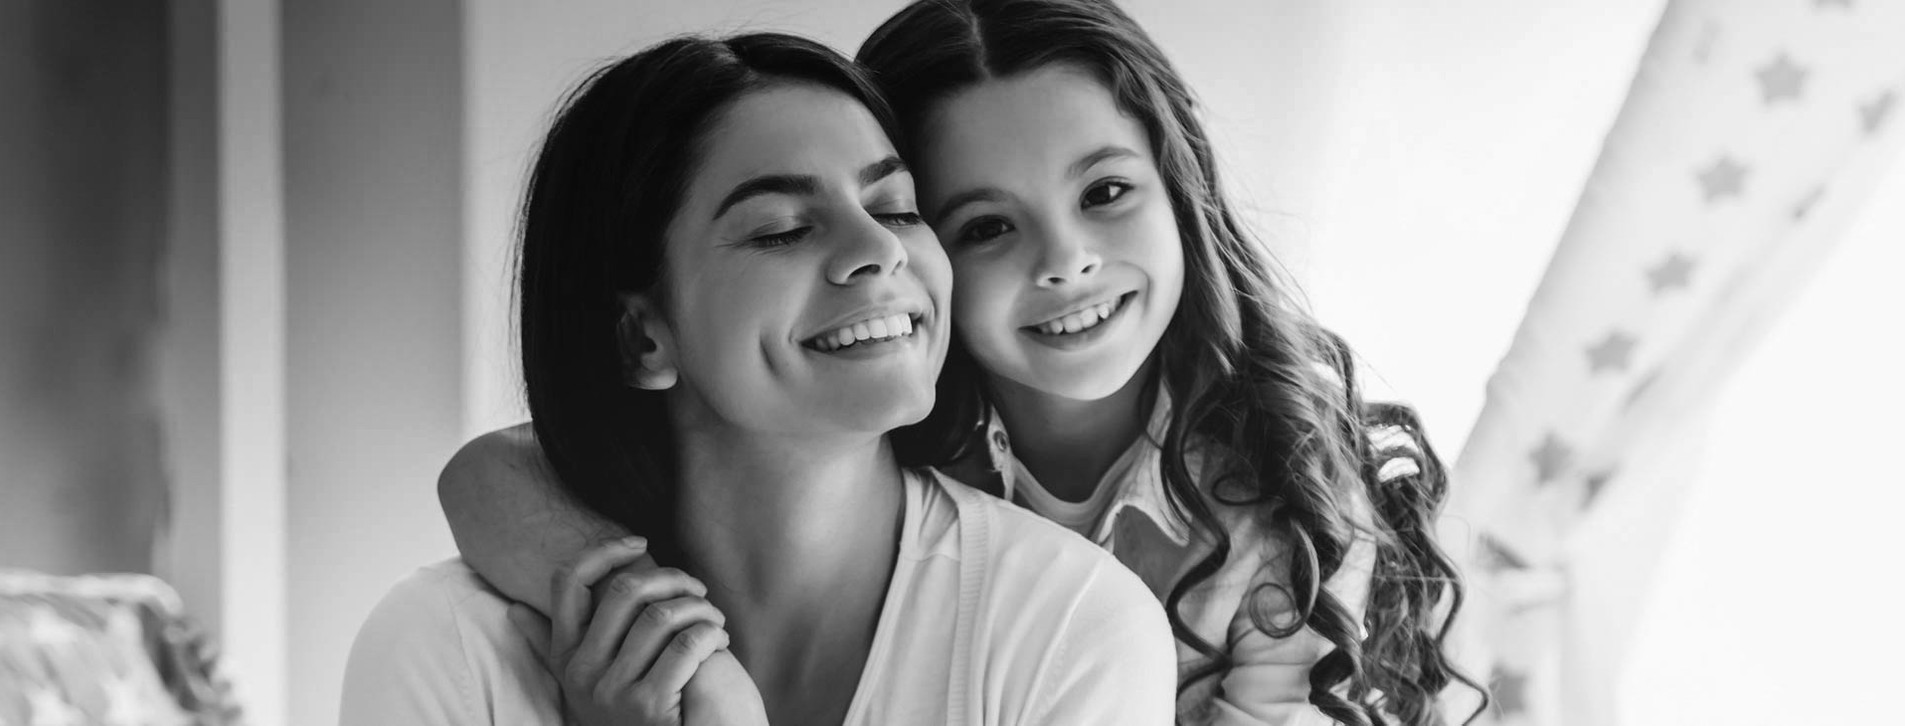 Фото 1 - Beauty Day для мамы и дочки